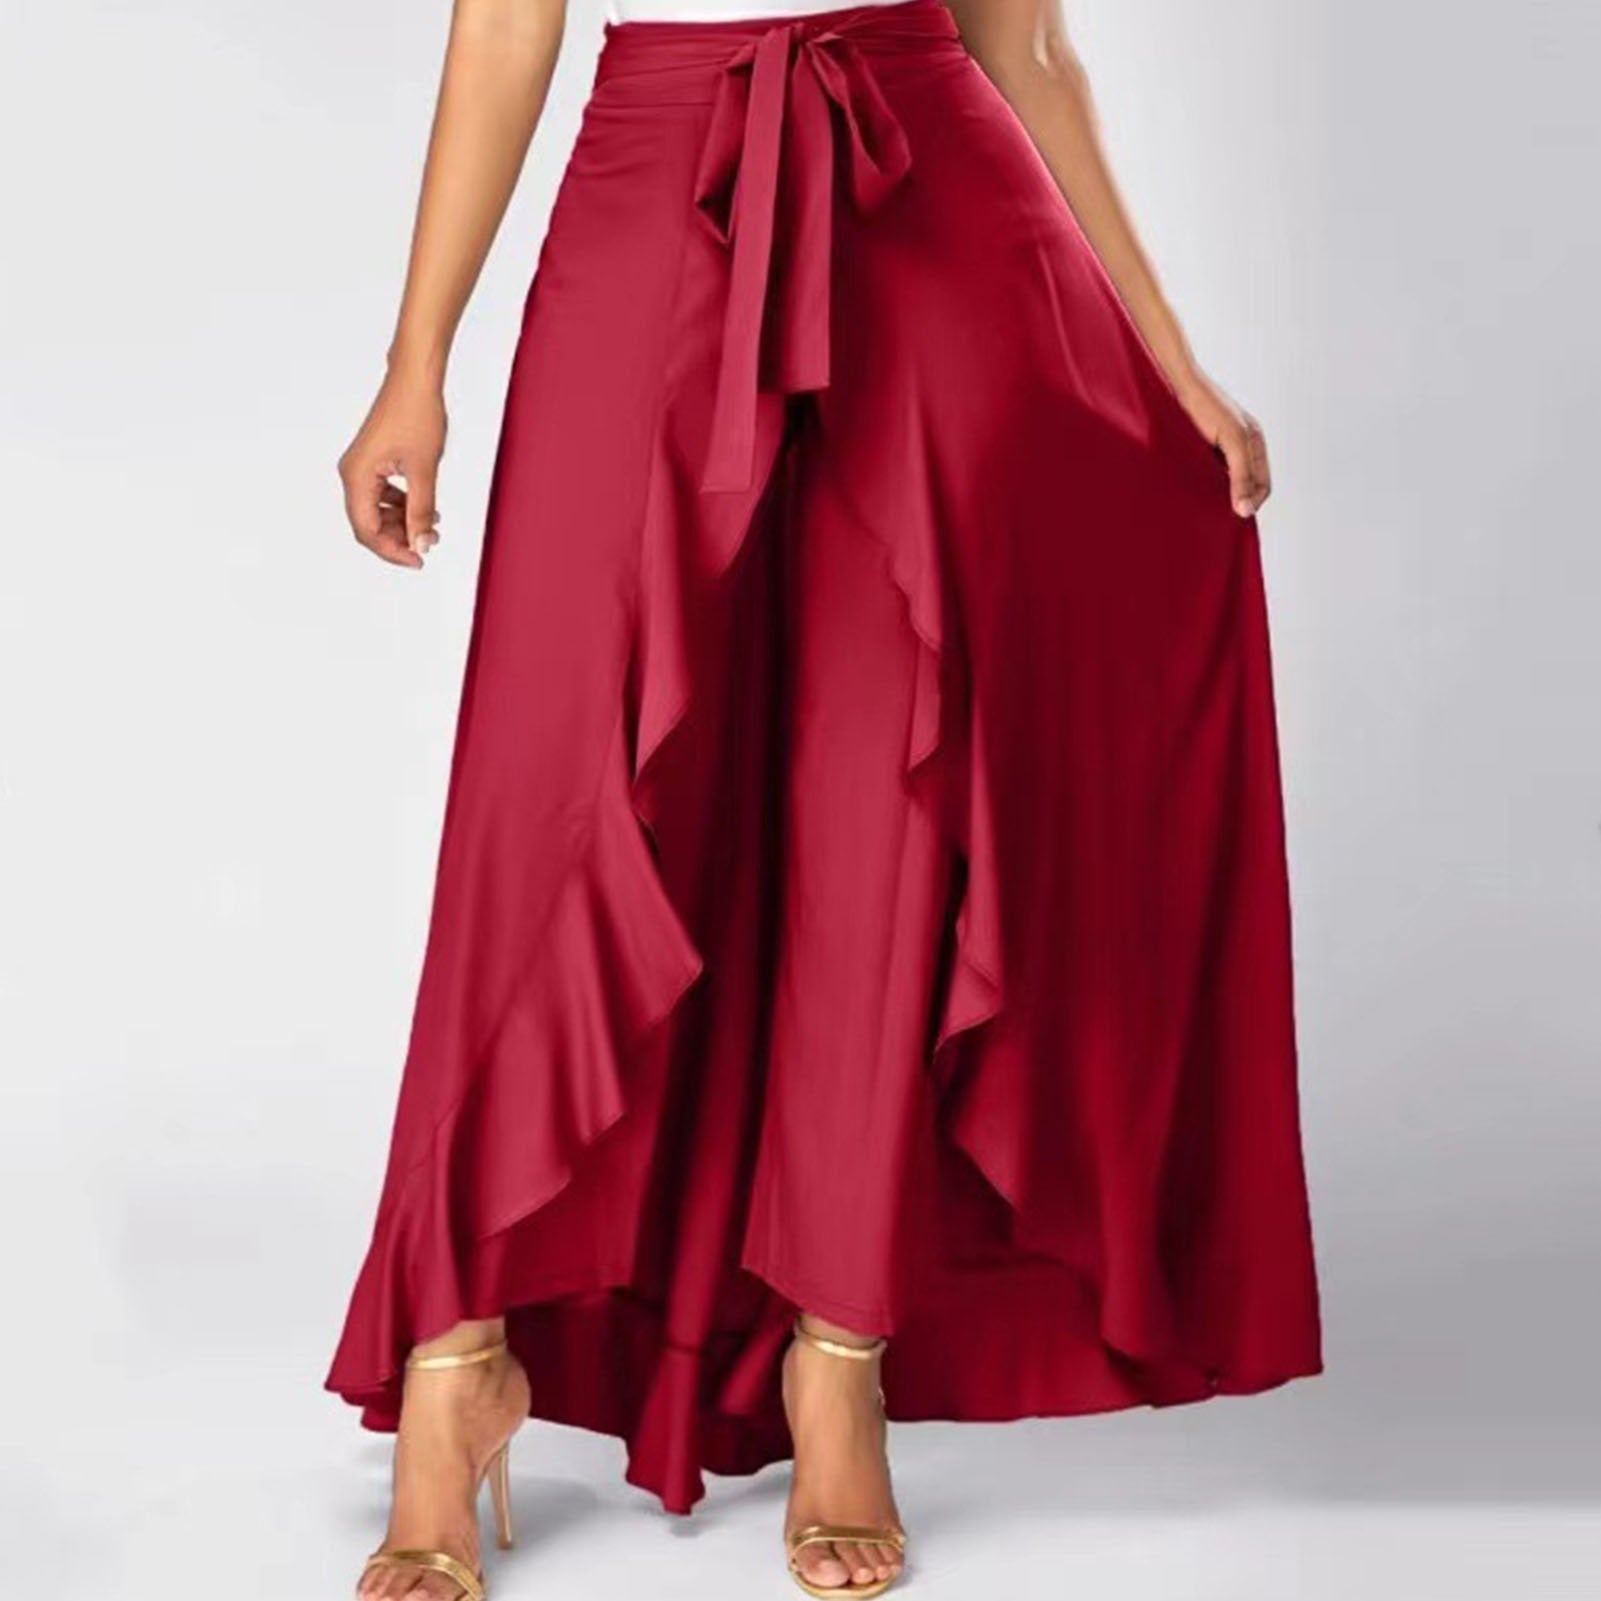 Women's Elegant Dress Pants Women's Fancy High Waist Lace Up Skirts Irregular Chiffon Ruffled Lace-Up Long Pants For Women